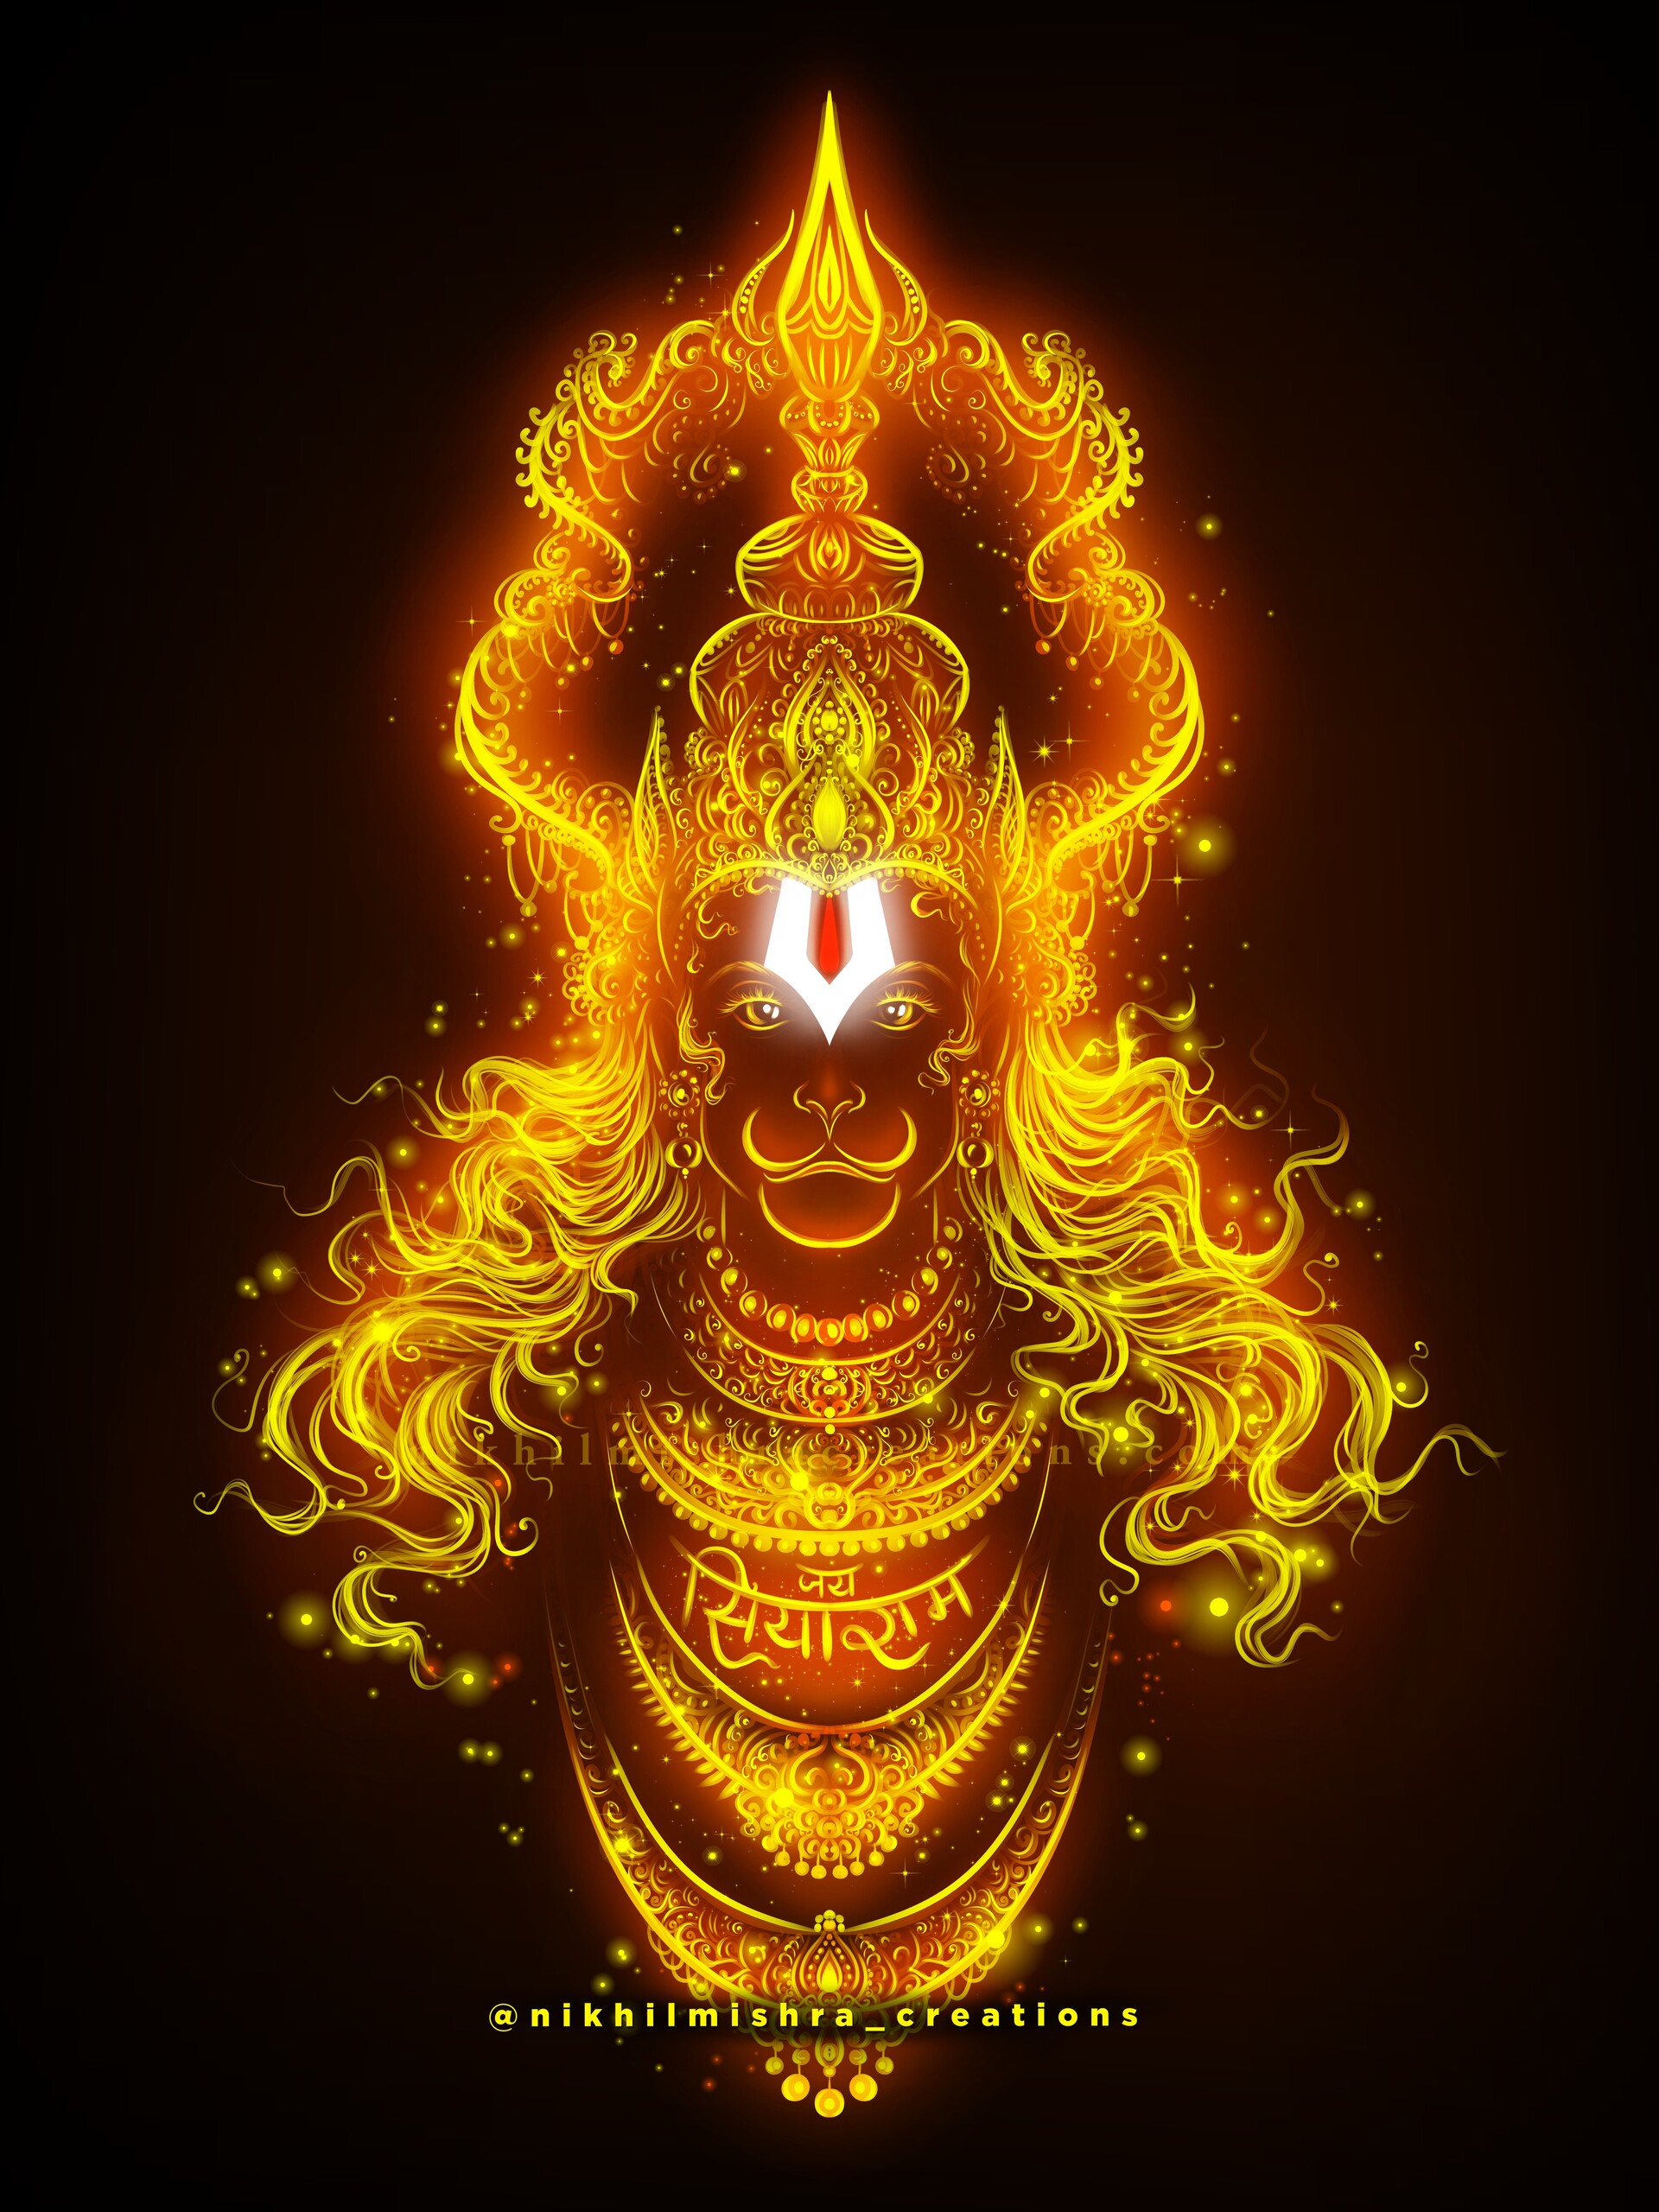 ArtStation - Shri Hanuman ji Digital art